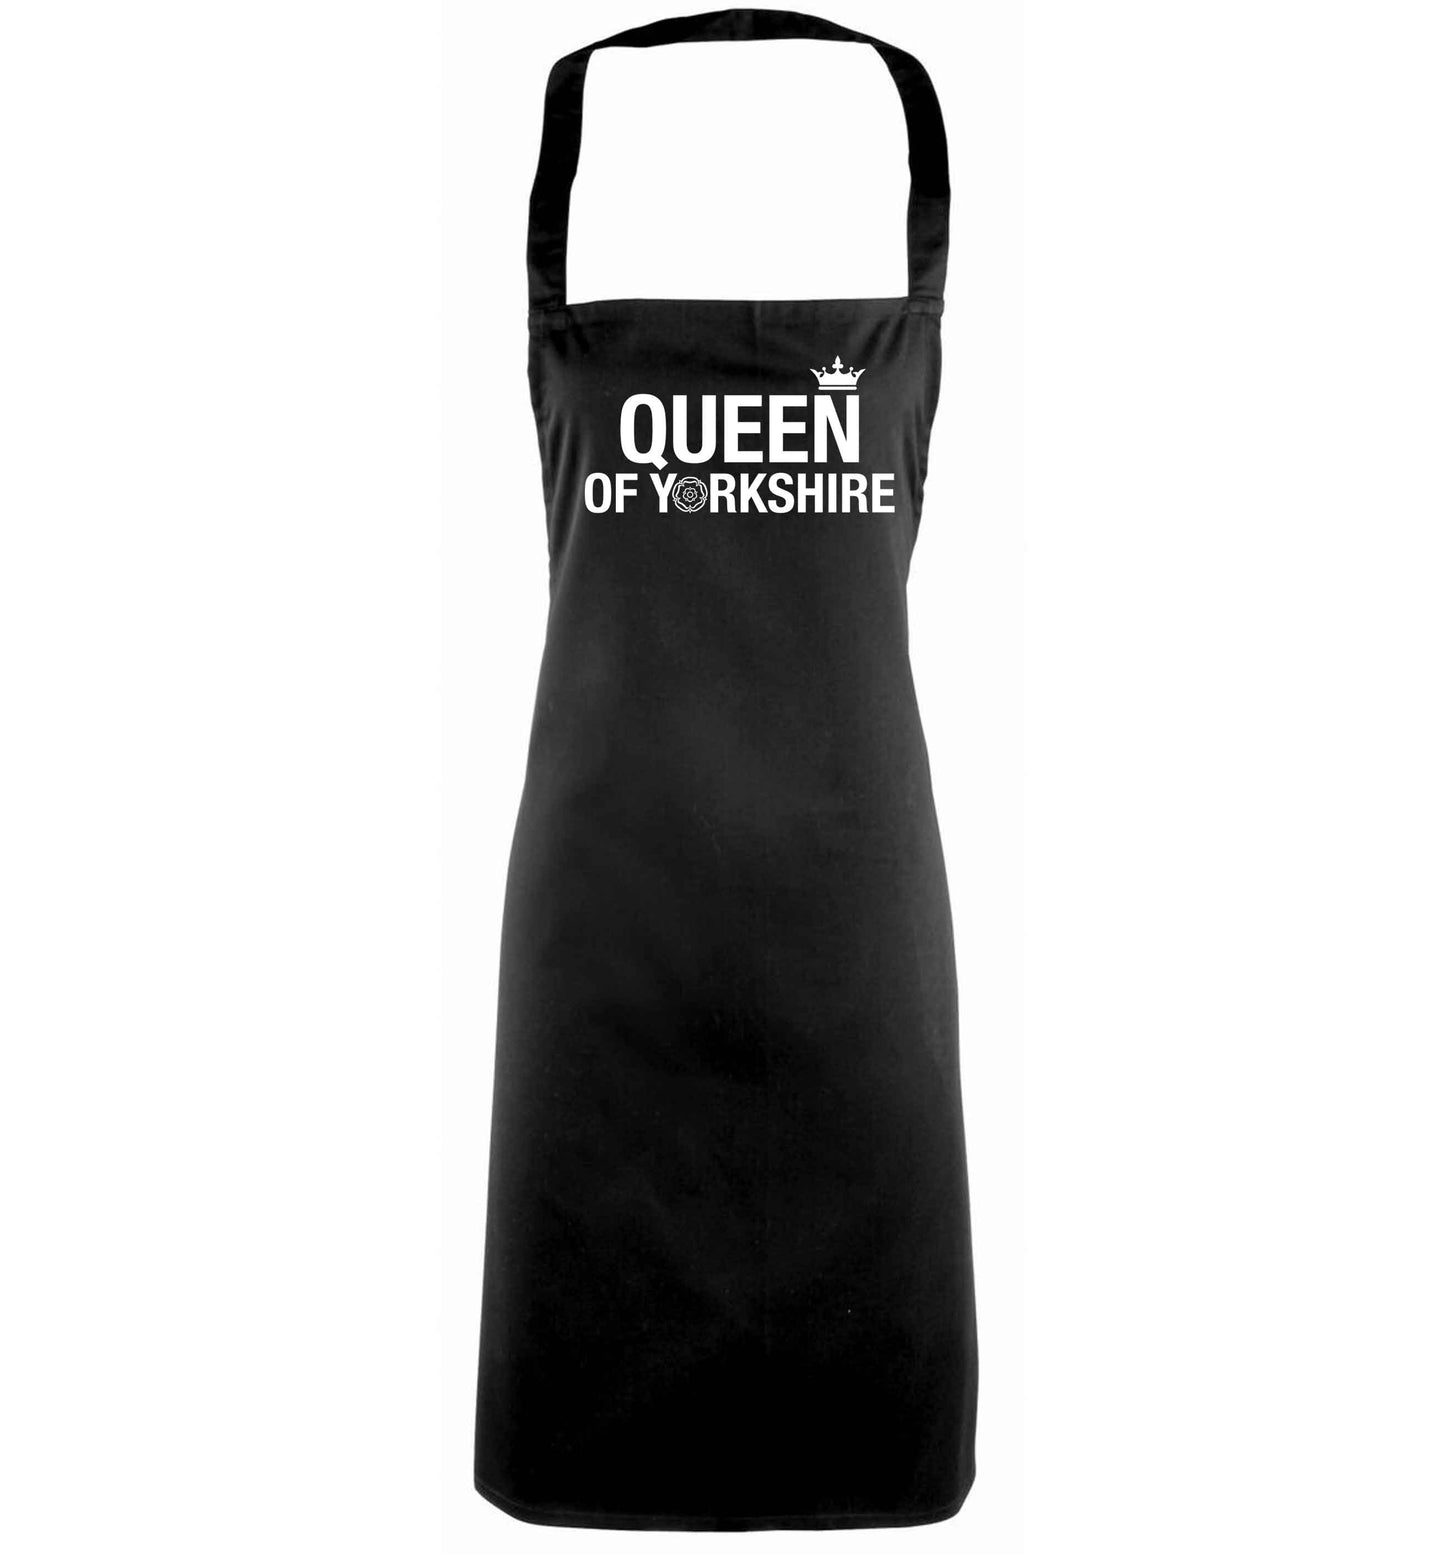 Queen of Yorkshire black apron